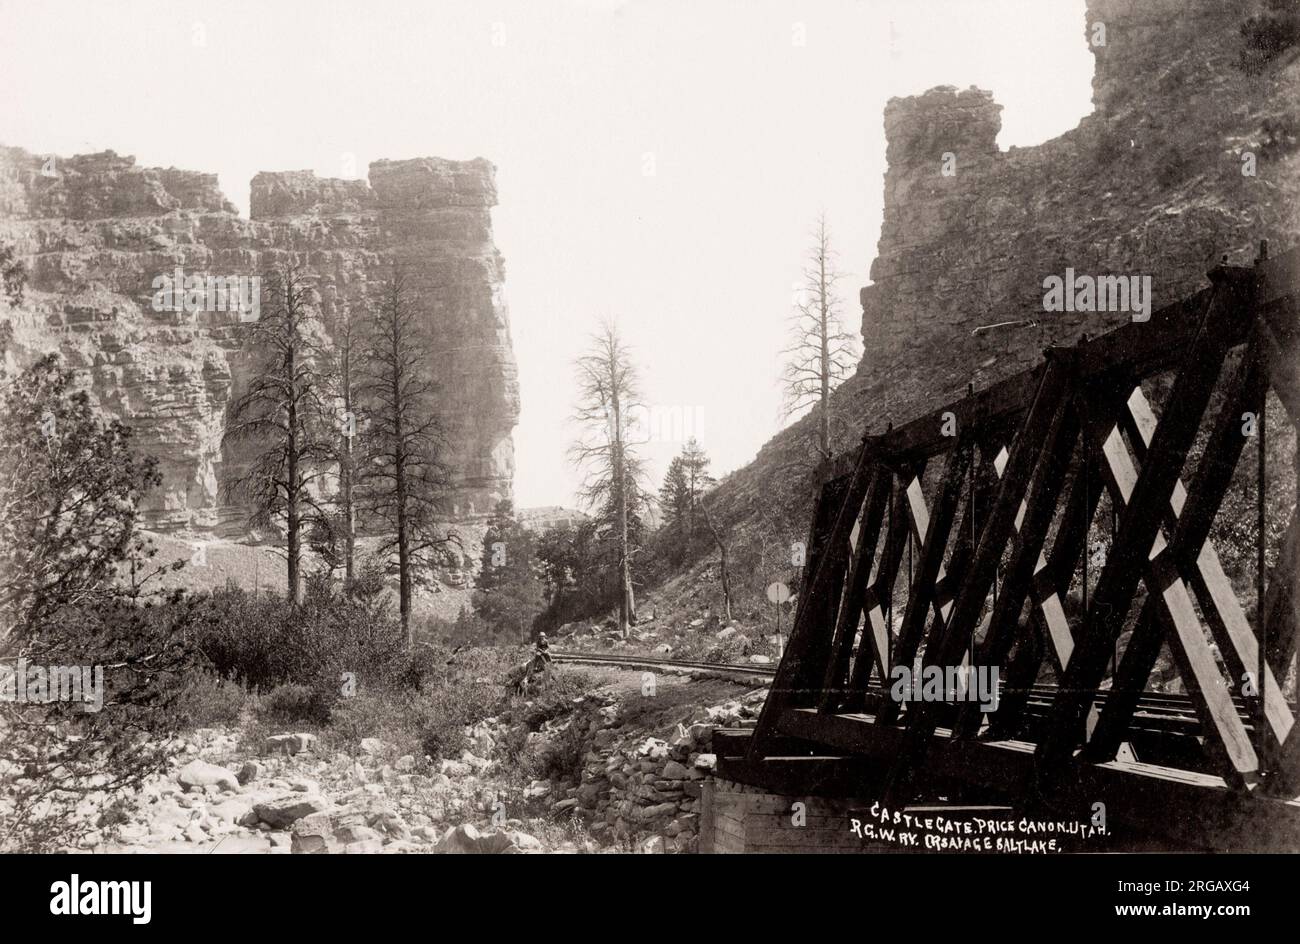 Vintage 19th century photograph: Castle Gate, Price Canon, Canyon, Utah USA, railroad, railway track. Stock Photo